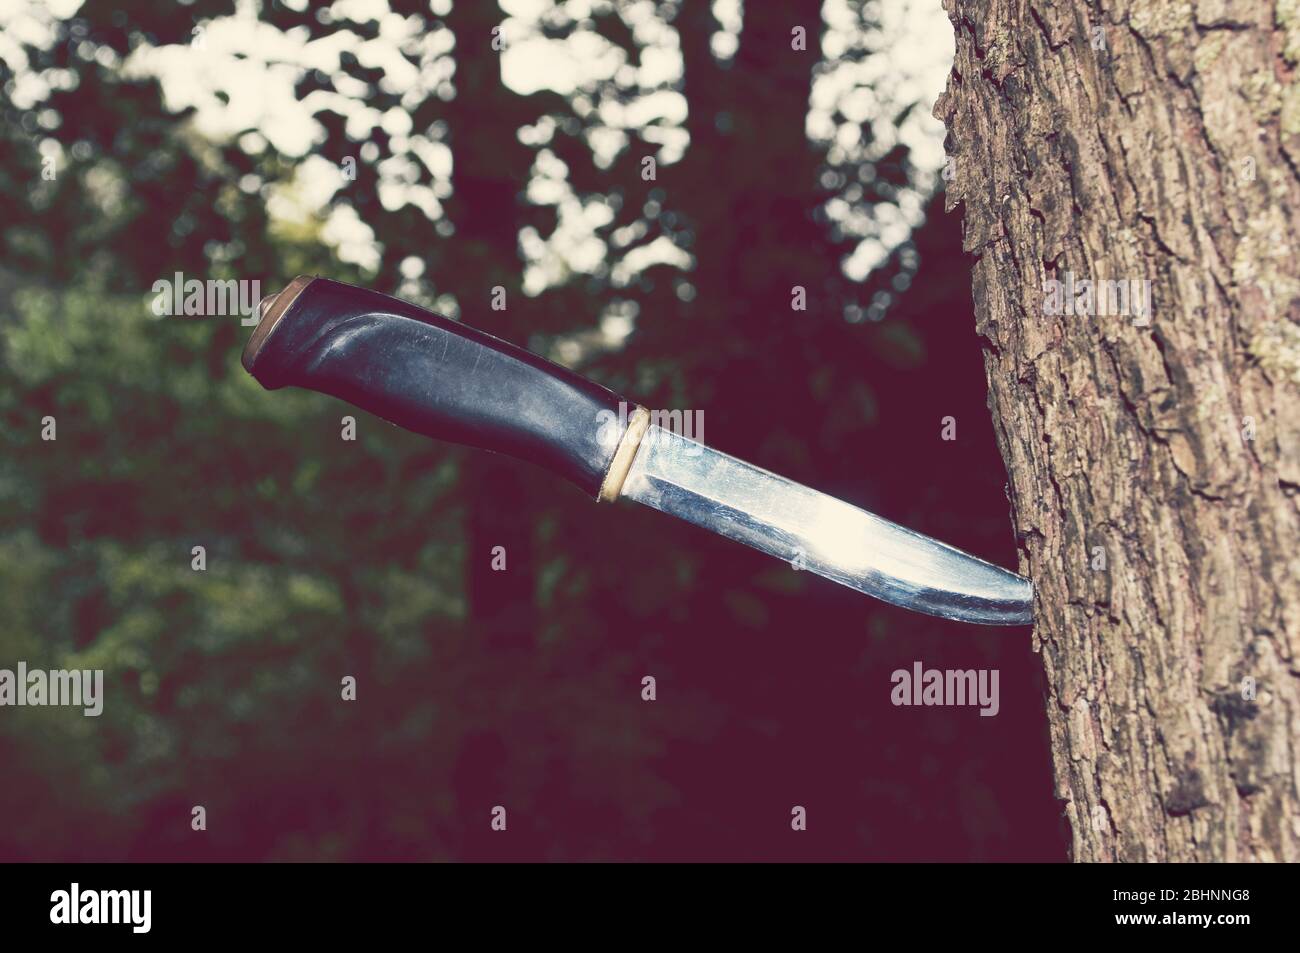 Hunting knife stuck into tree Stock Photo